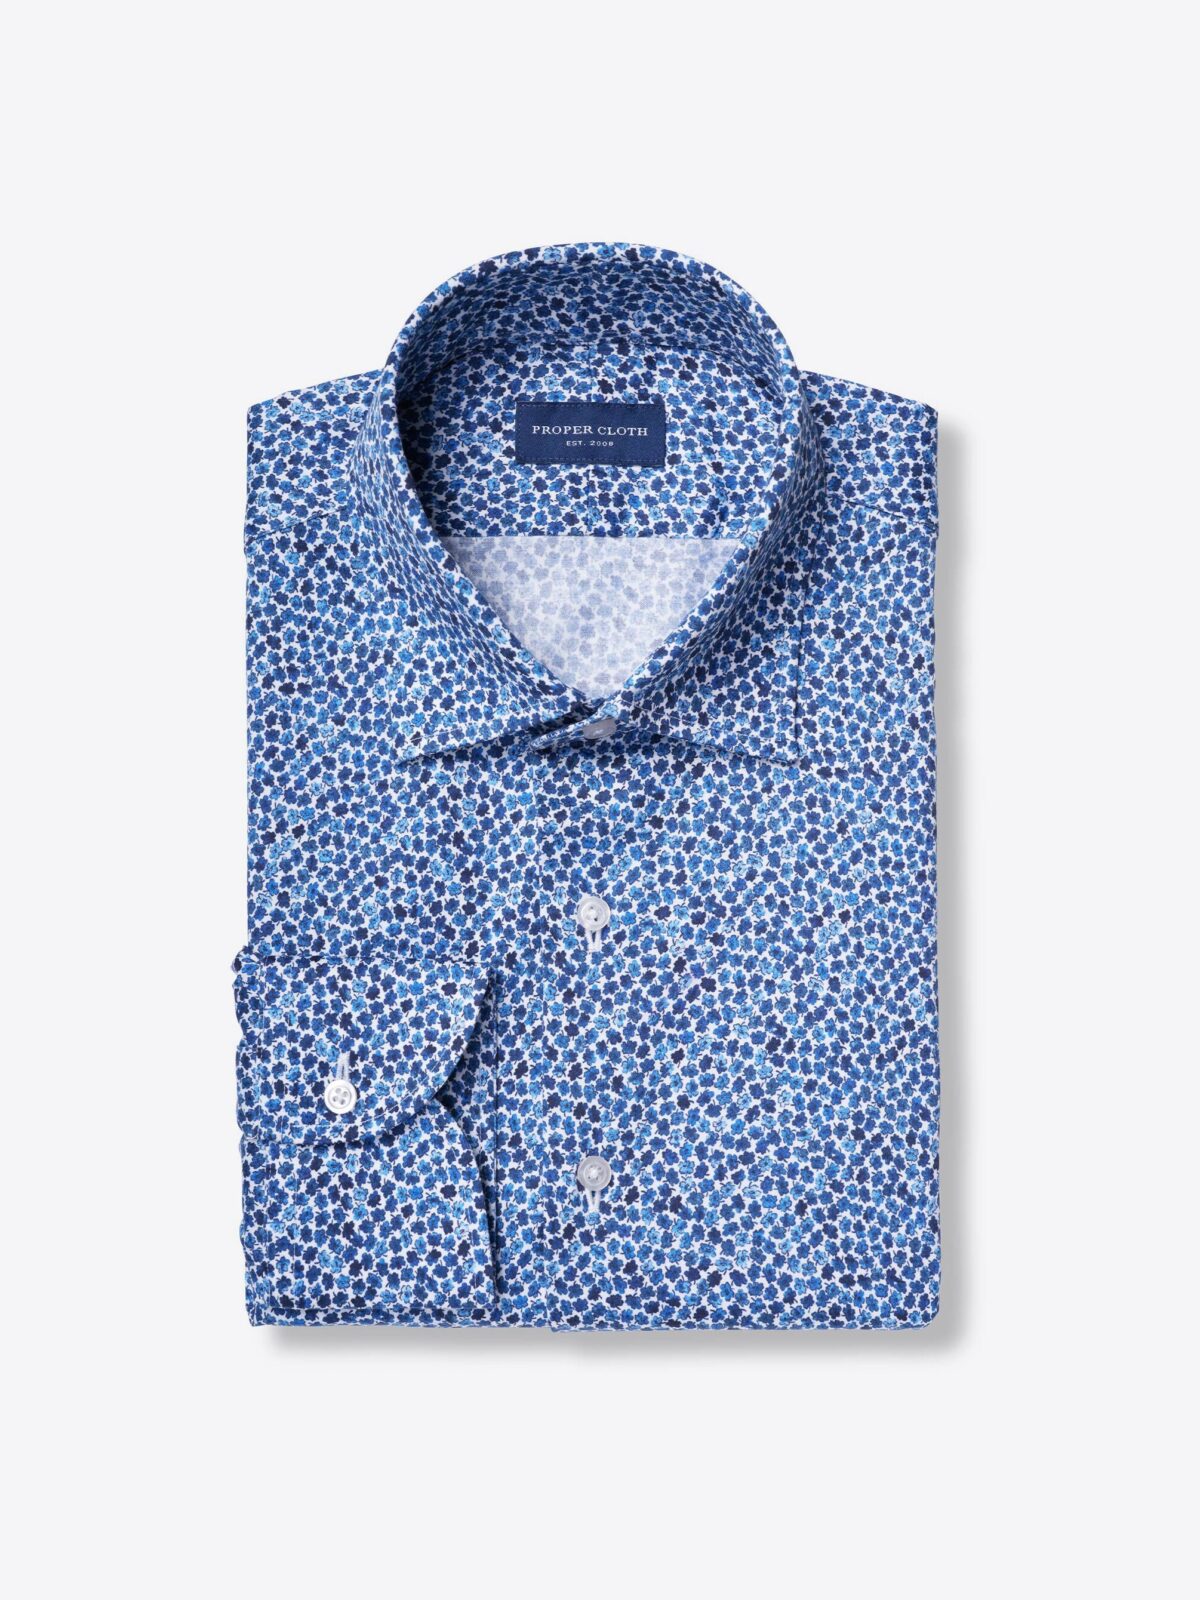 Cotton Mens Flower Printed Shirt